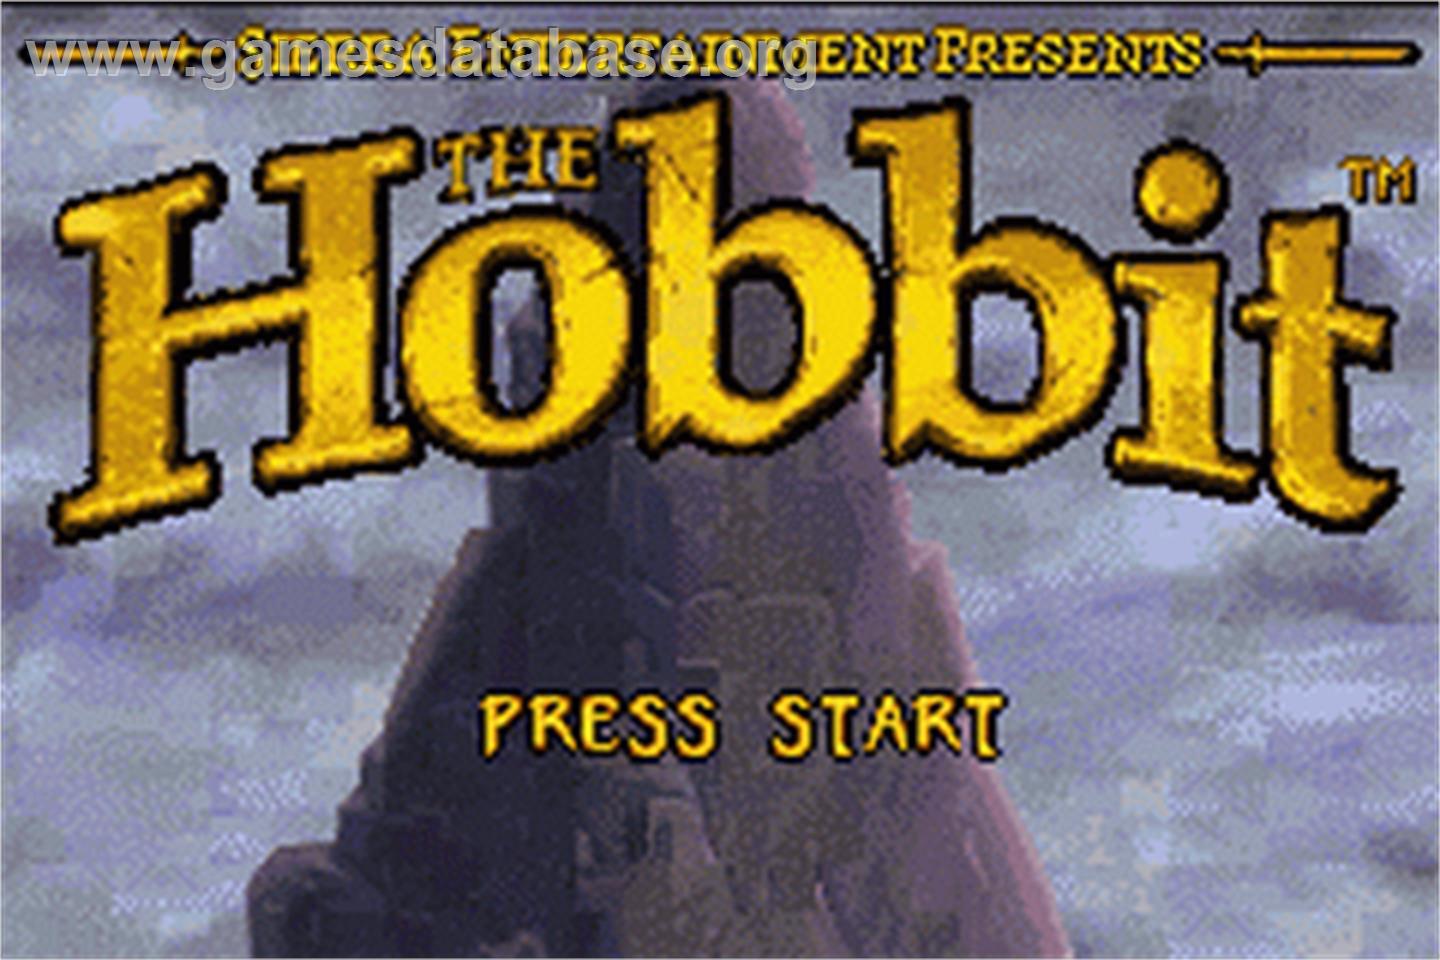 Hobbit - Nintendo Game Boy Advance - Artwork - Title Screen